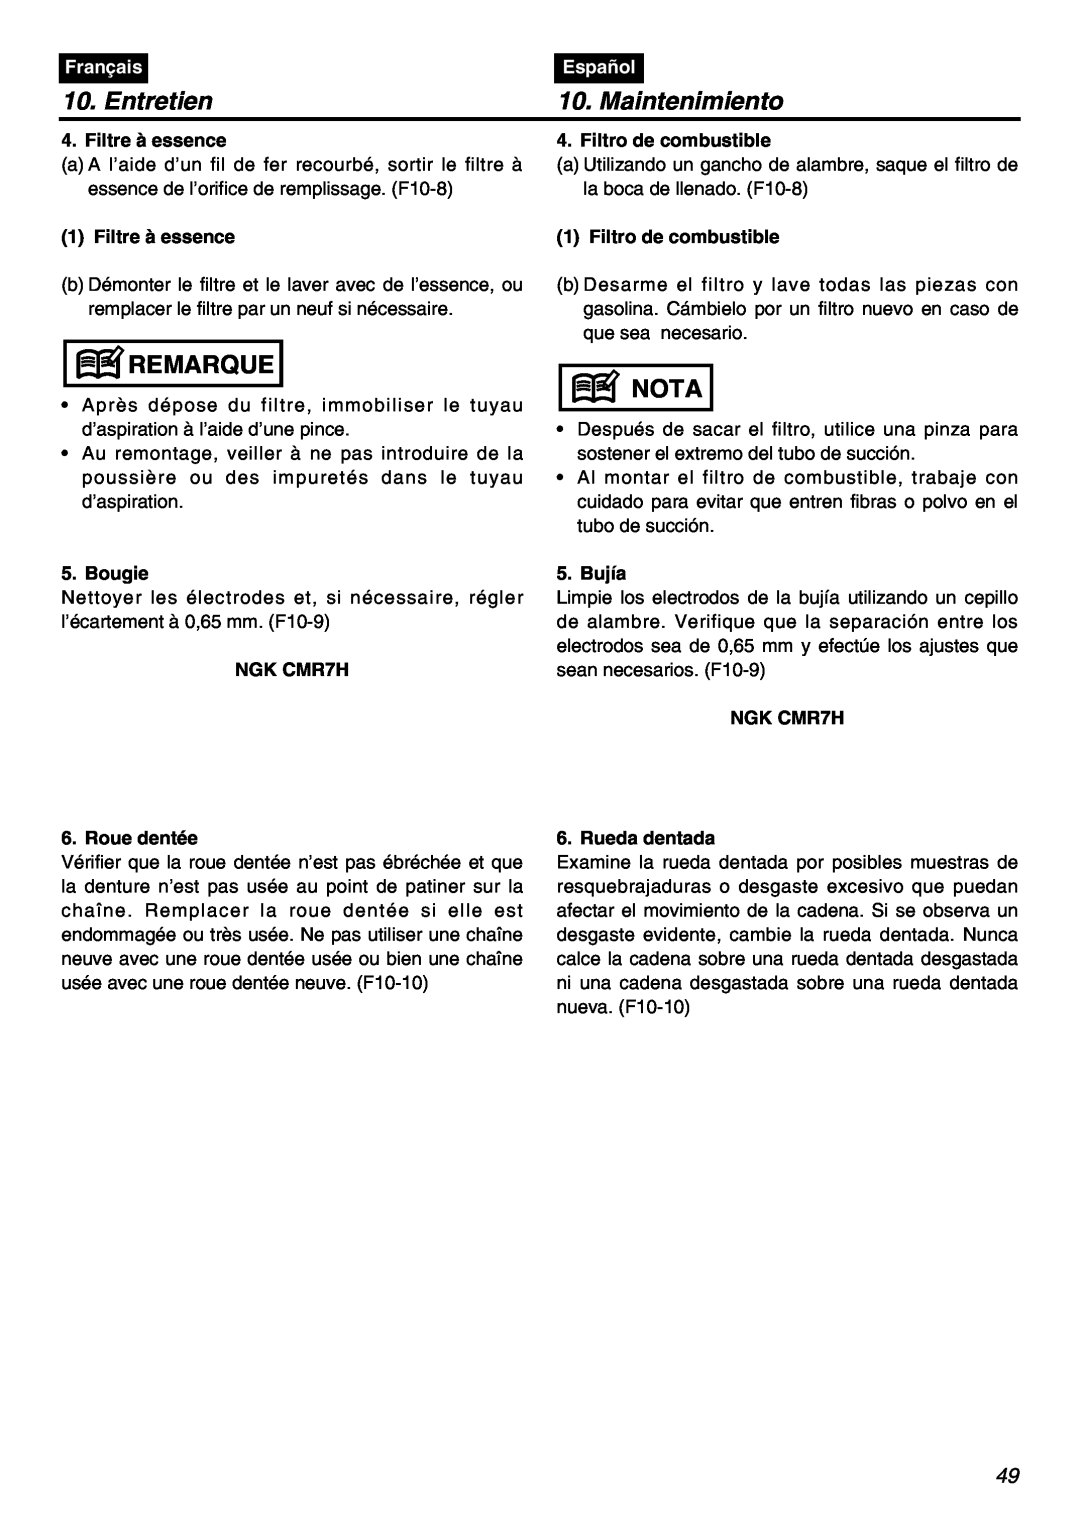 RedMax GZ400 manual Entretien, Maintenimiento, Remarque, Nota, Français, Español 